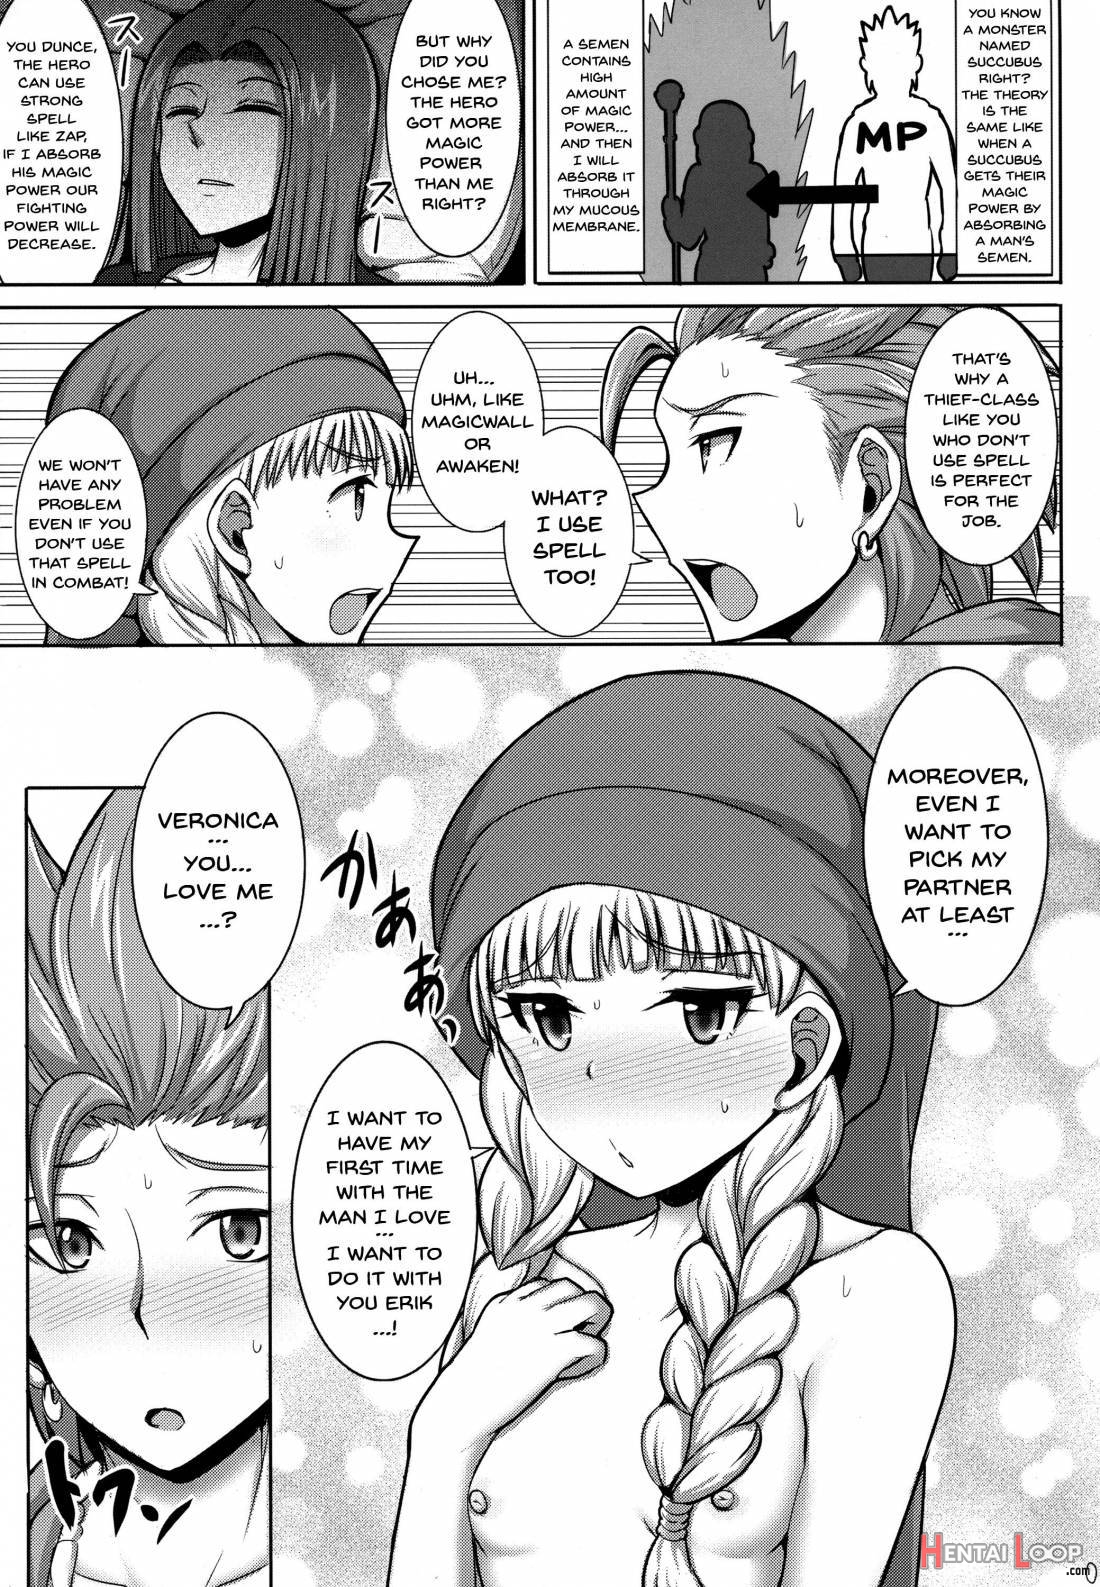 Veronica-sama Returns page 4